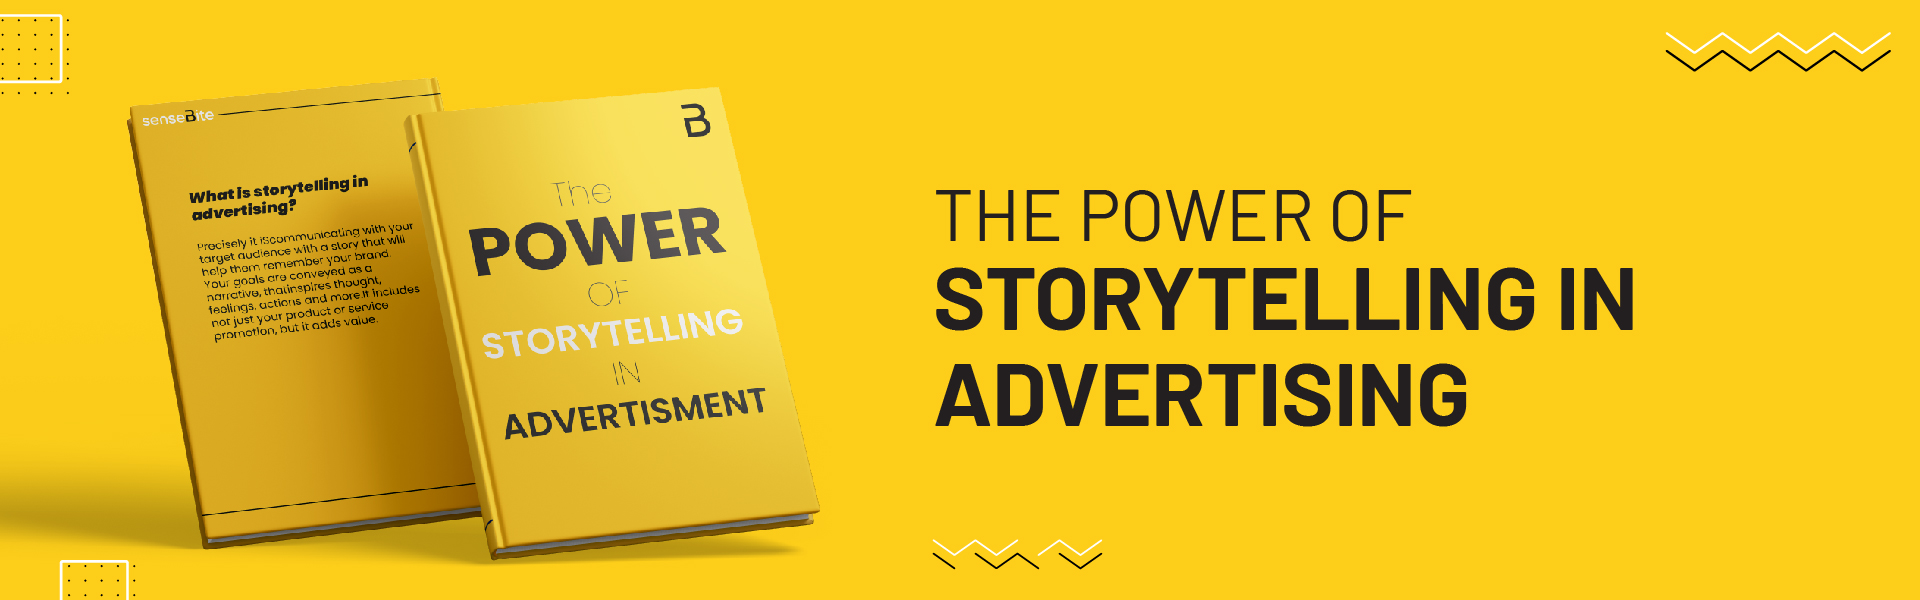 The power of storytelling in advertising 